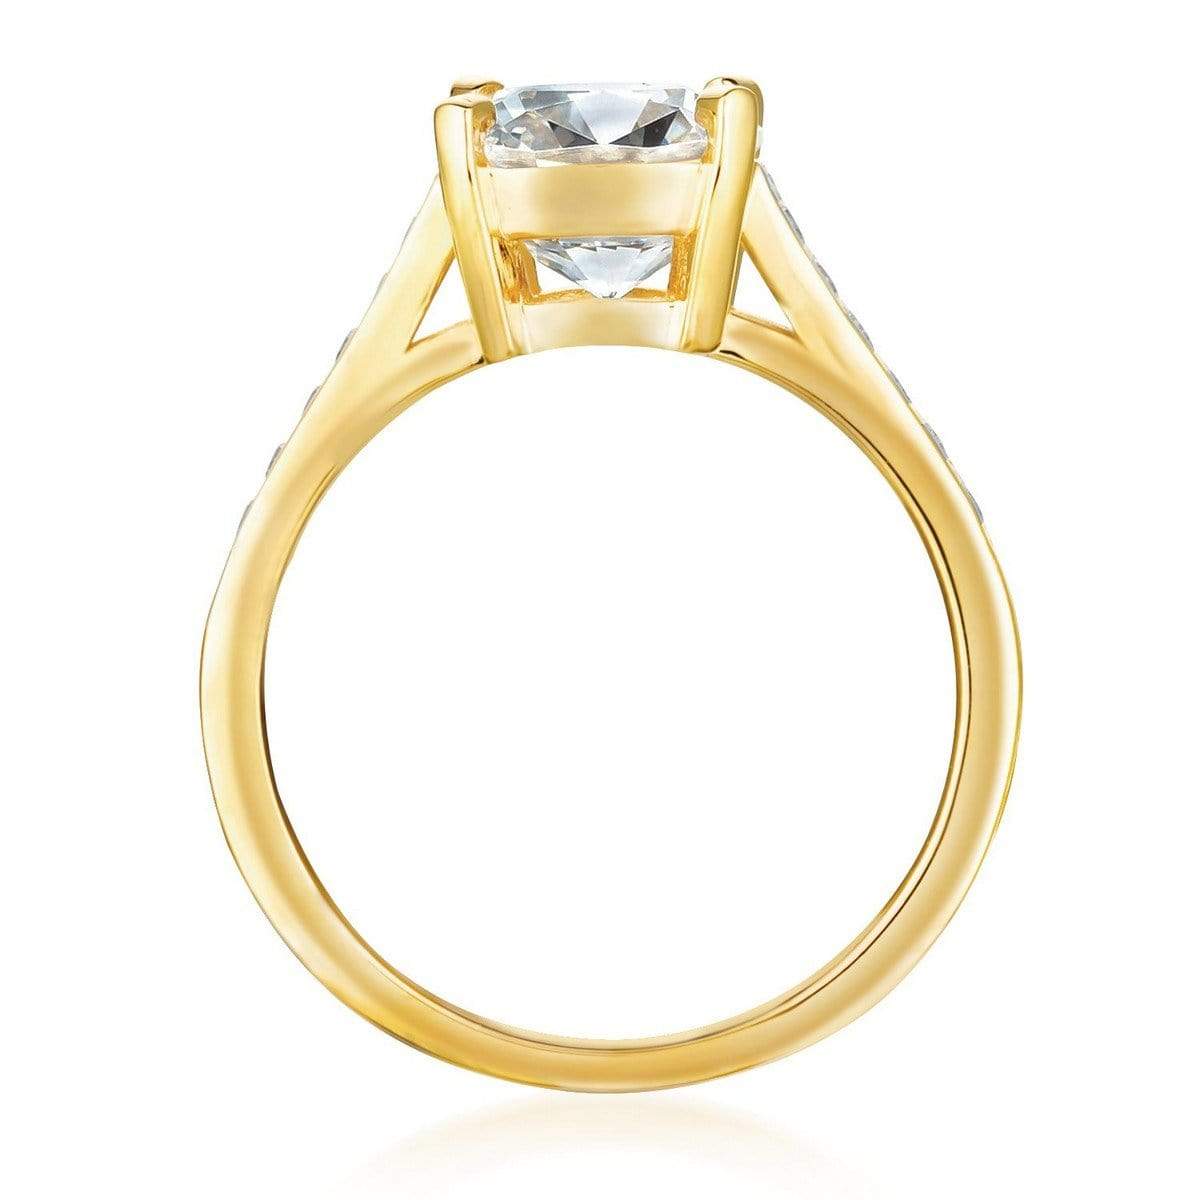 Crislu Jewelry CRISLU Radiant Cushion Cut Ring finished in 18KT Gold - Size 7